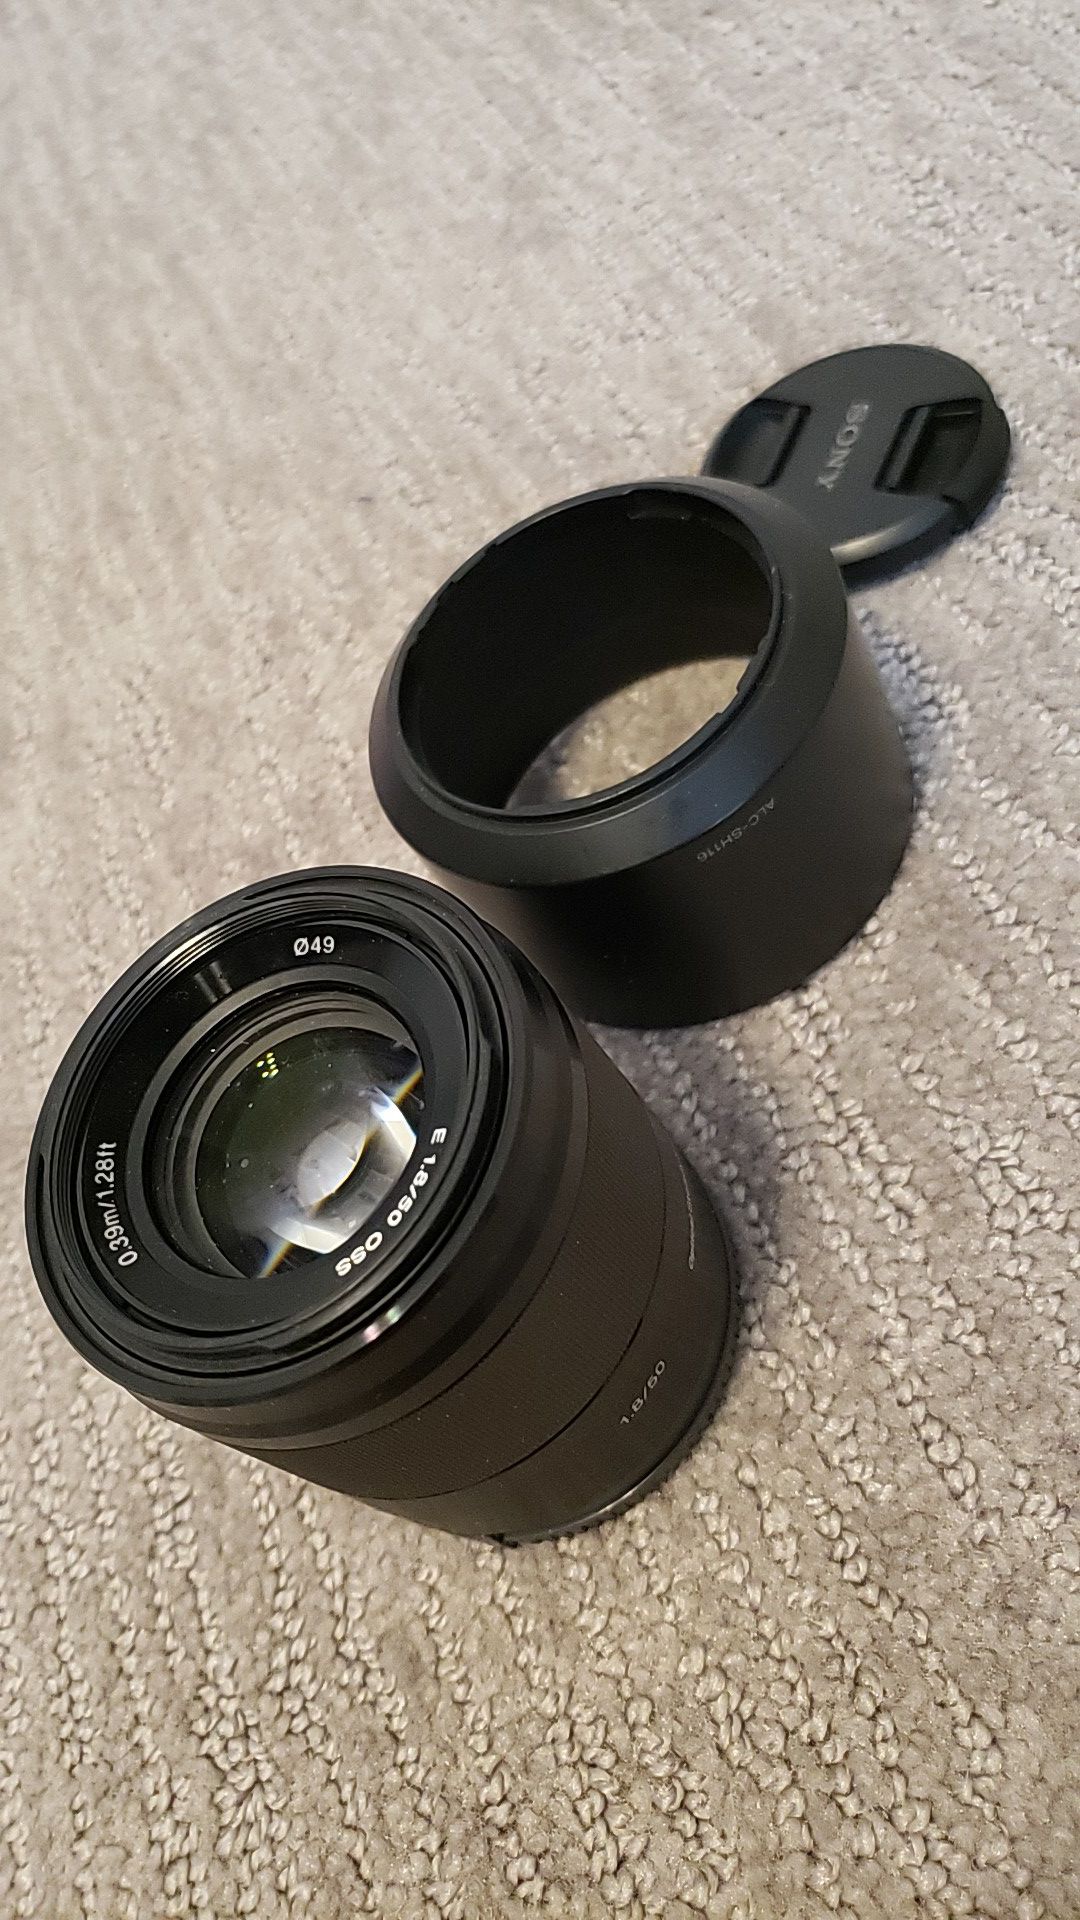 Sel50f18 lens for sony emount apsc cameras